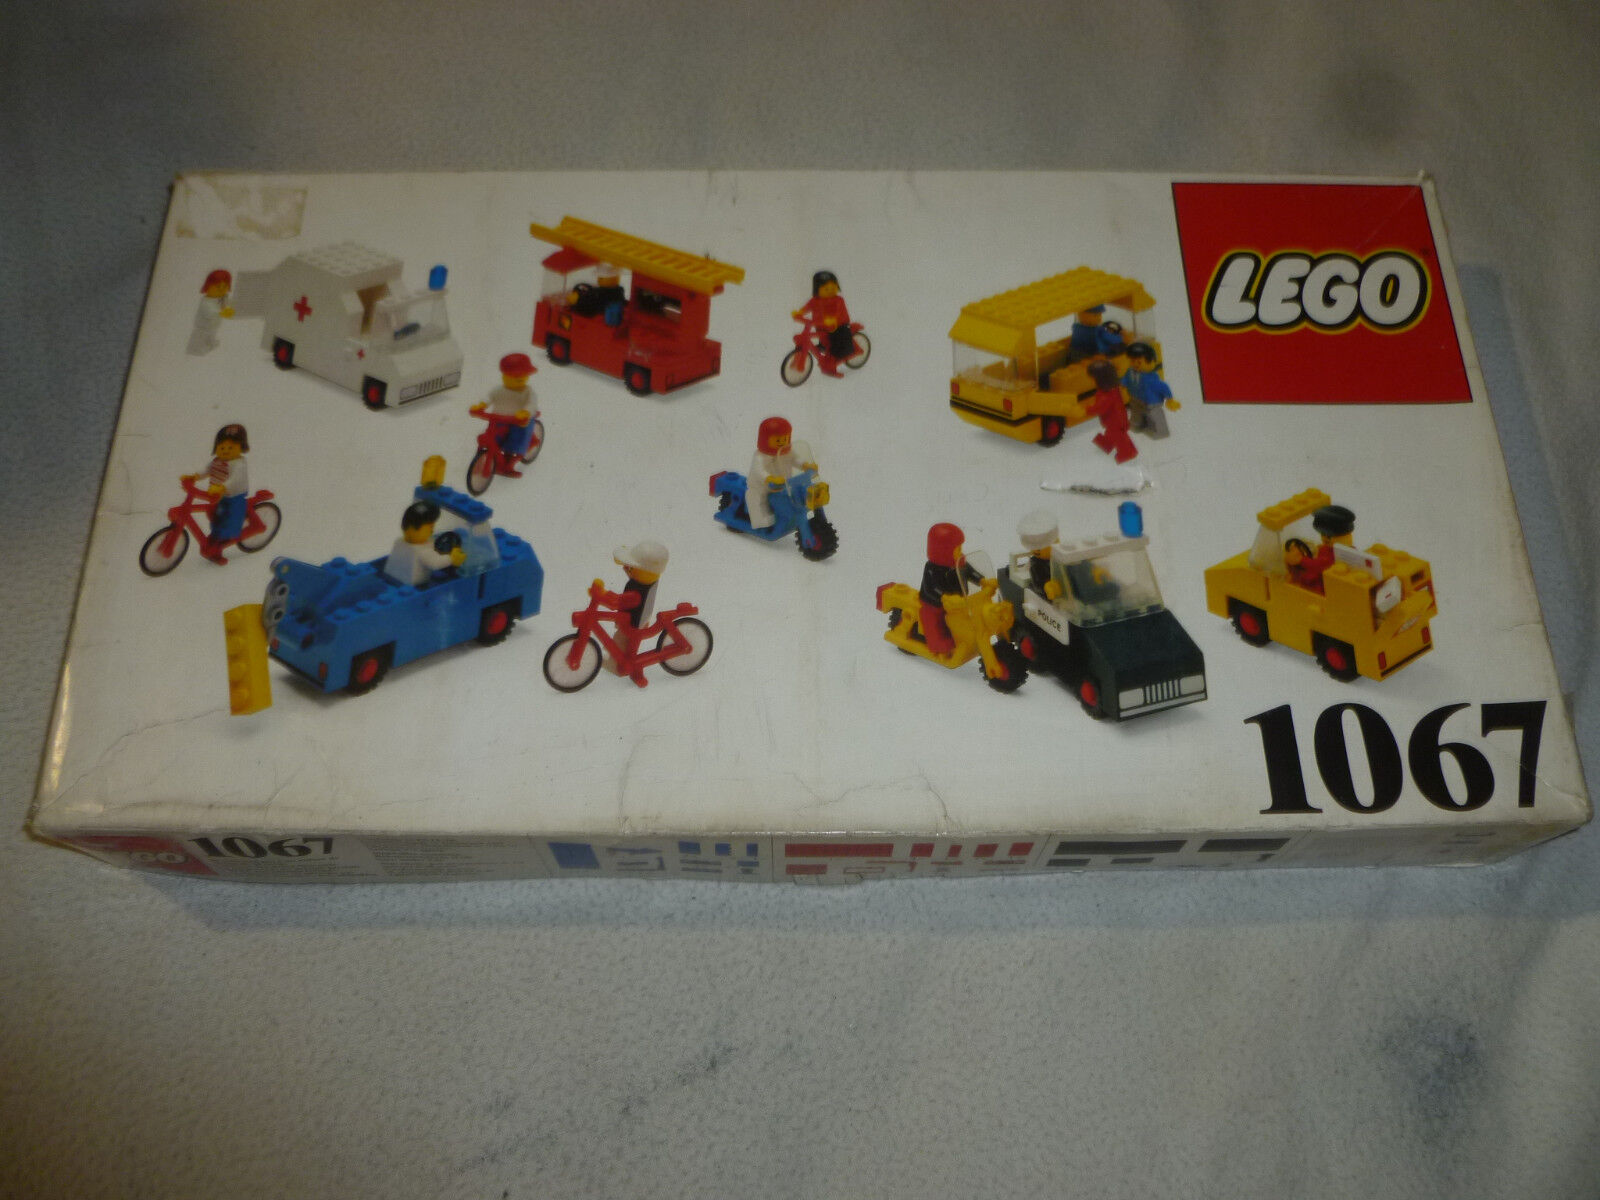 BOXED LEGO BUILDING BLOCK SET 1067 VINTAGE FIGURES AMBULANCE POLICE FIRETRUCK >>